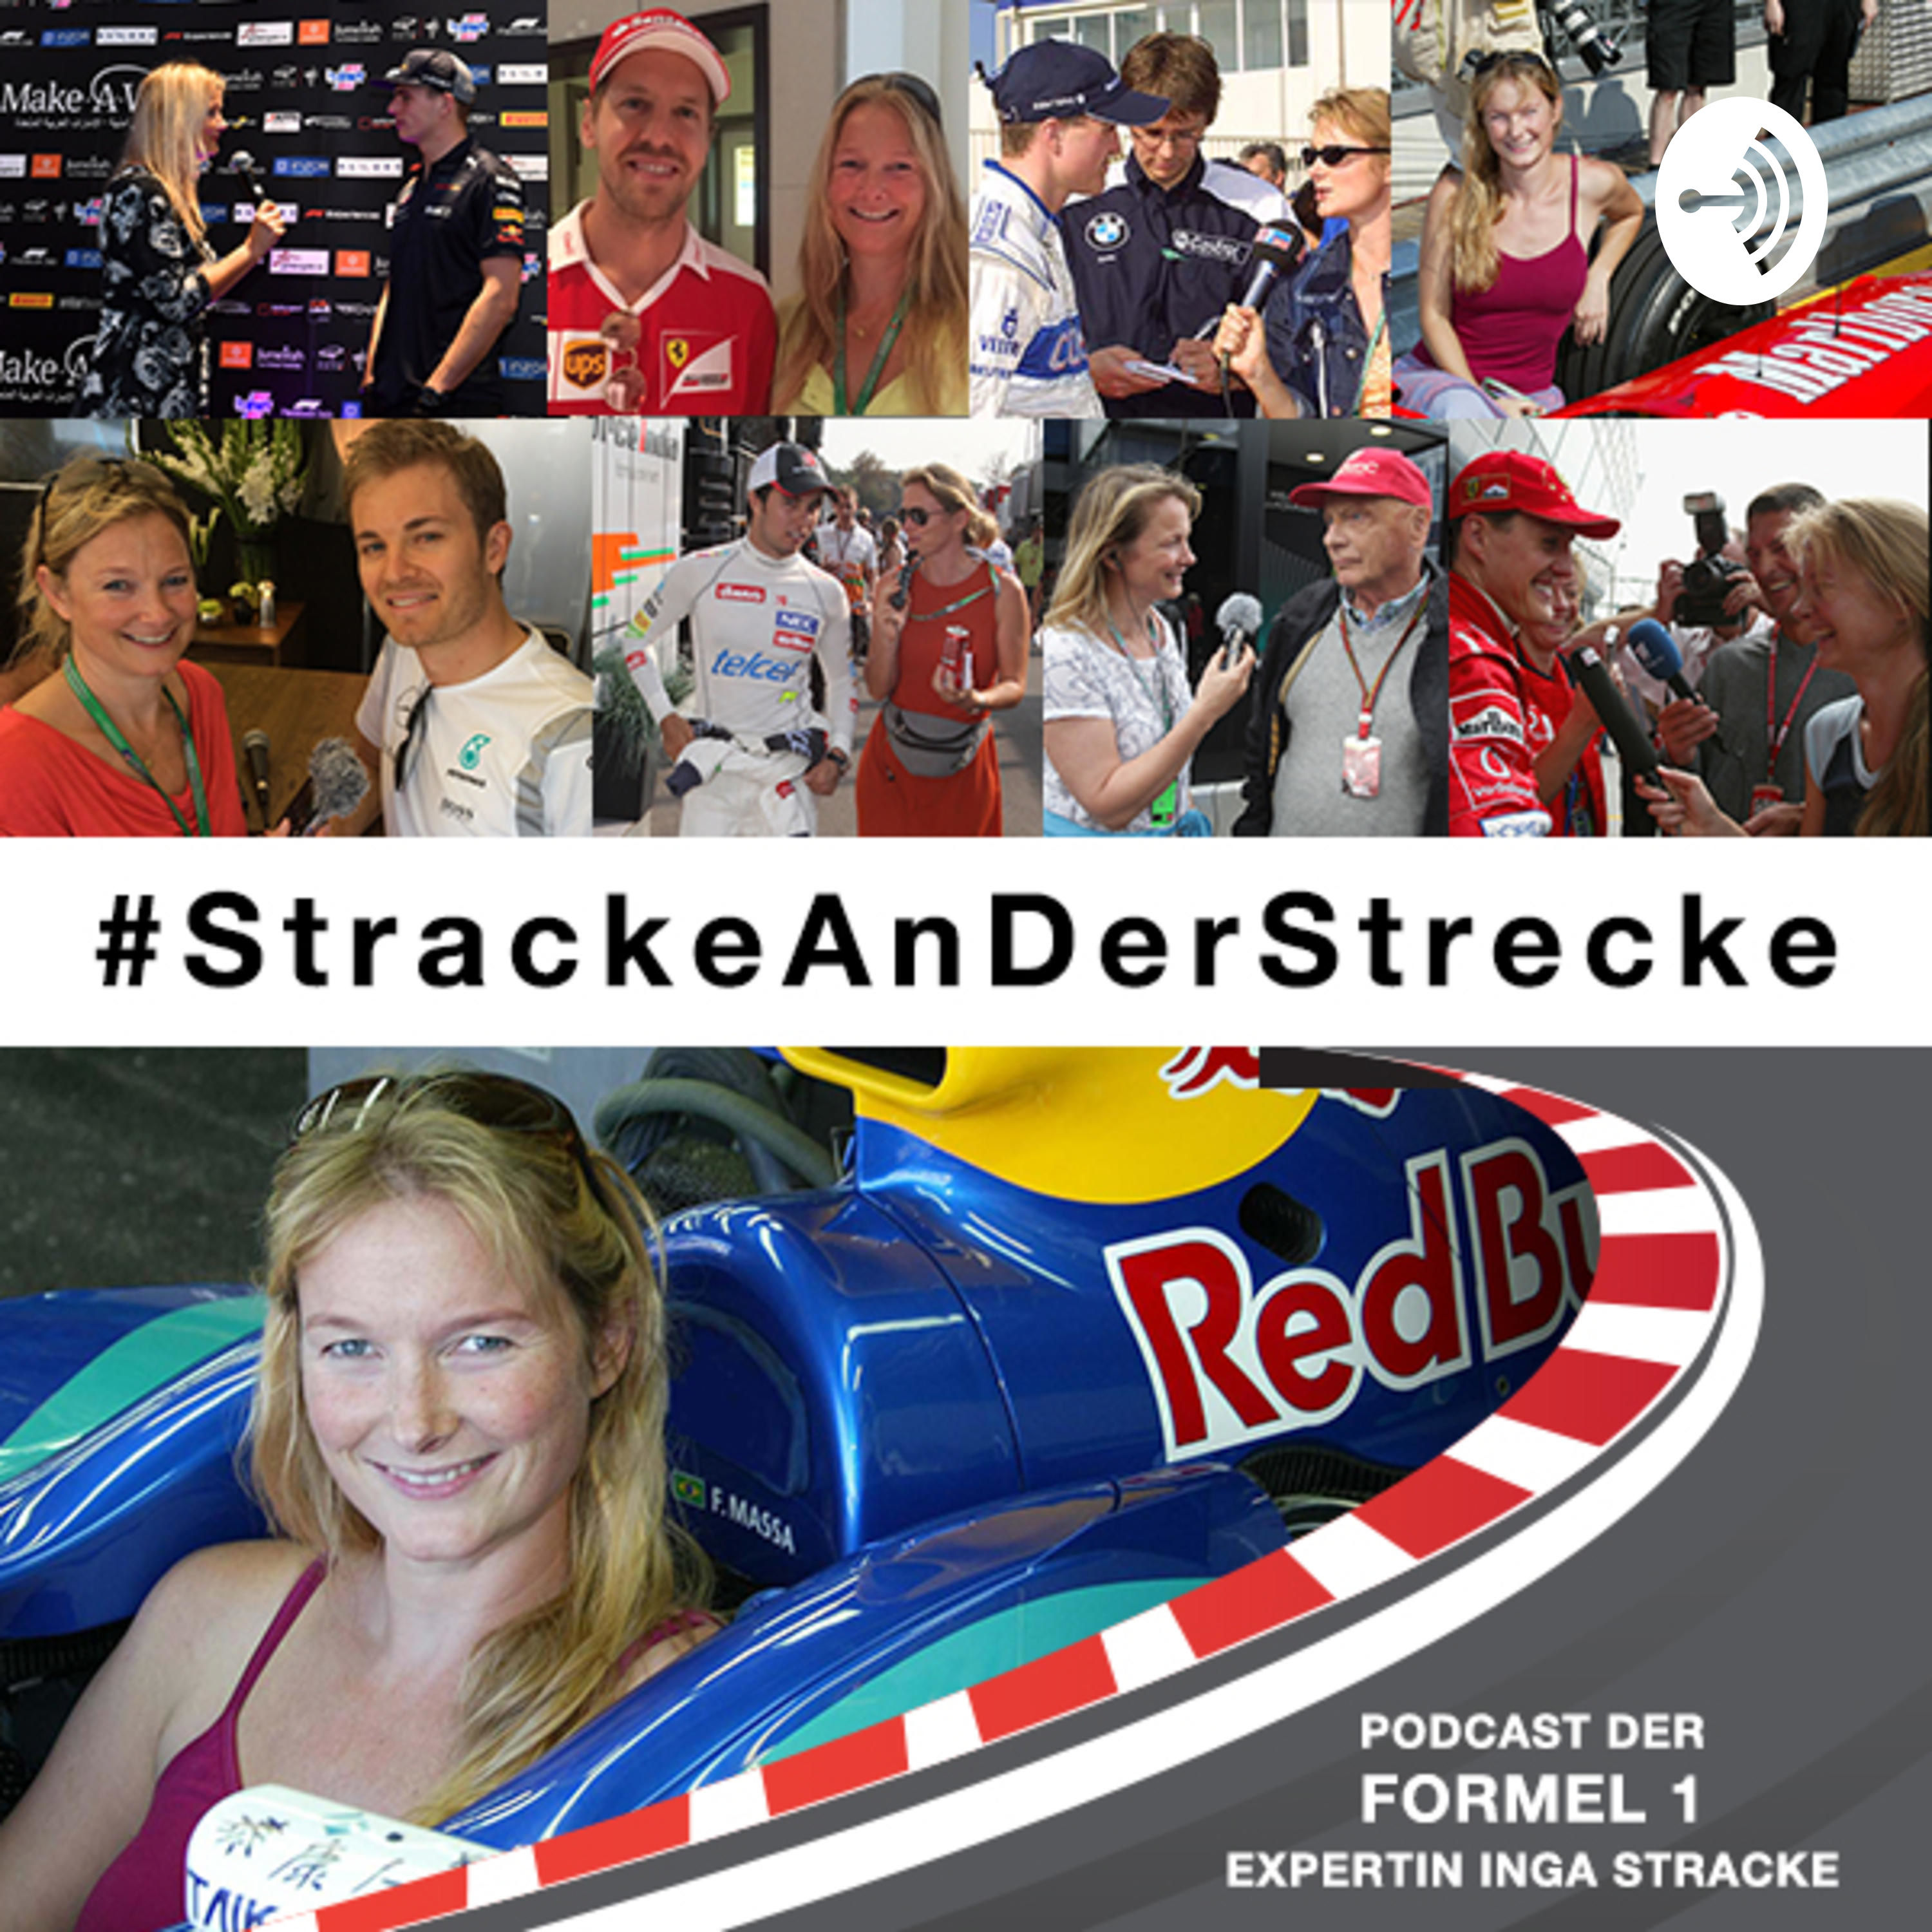 Formel 1 Stracke an der Strecke - Podcast